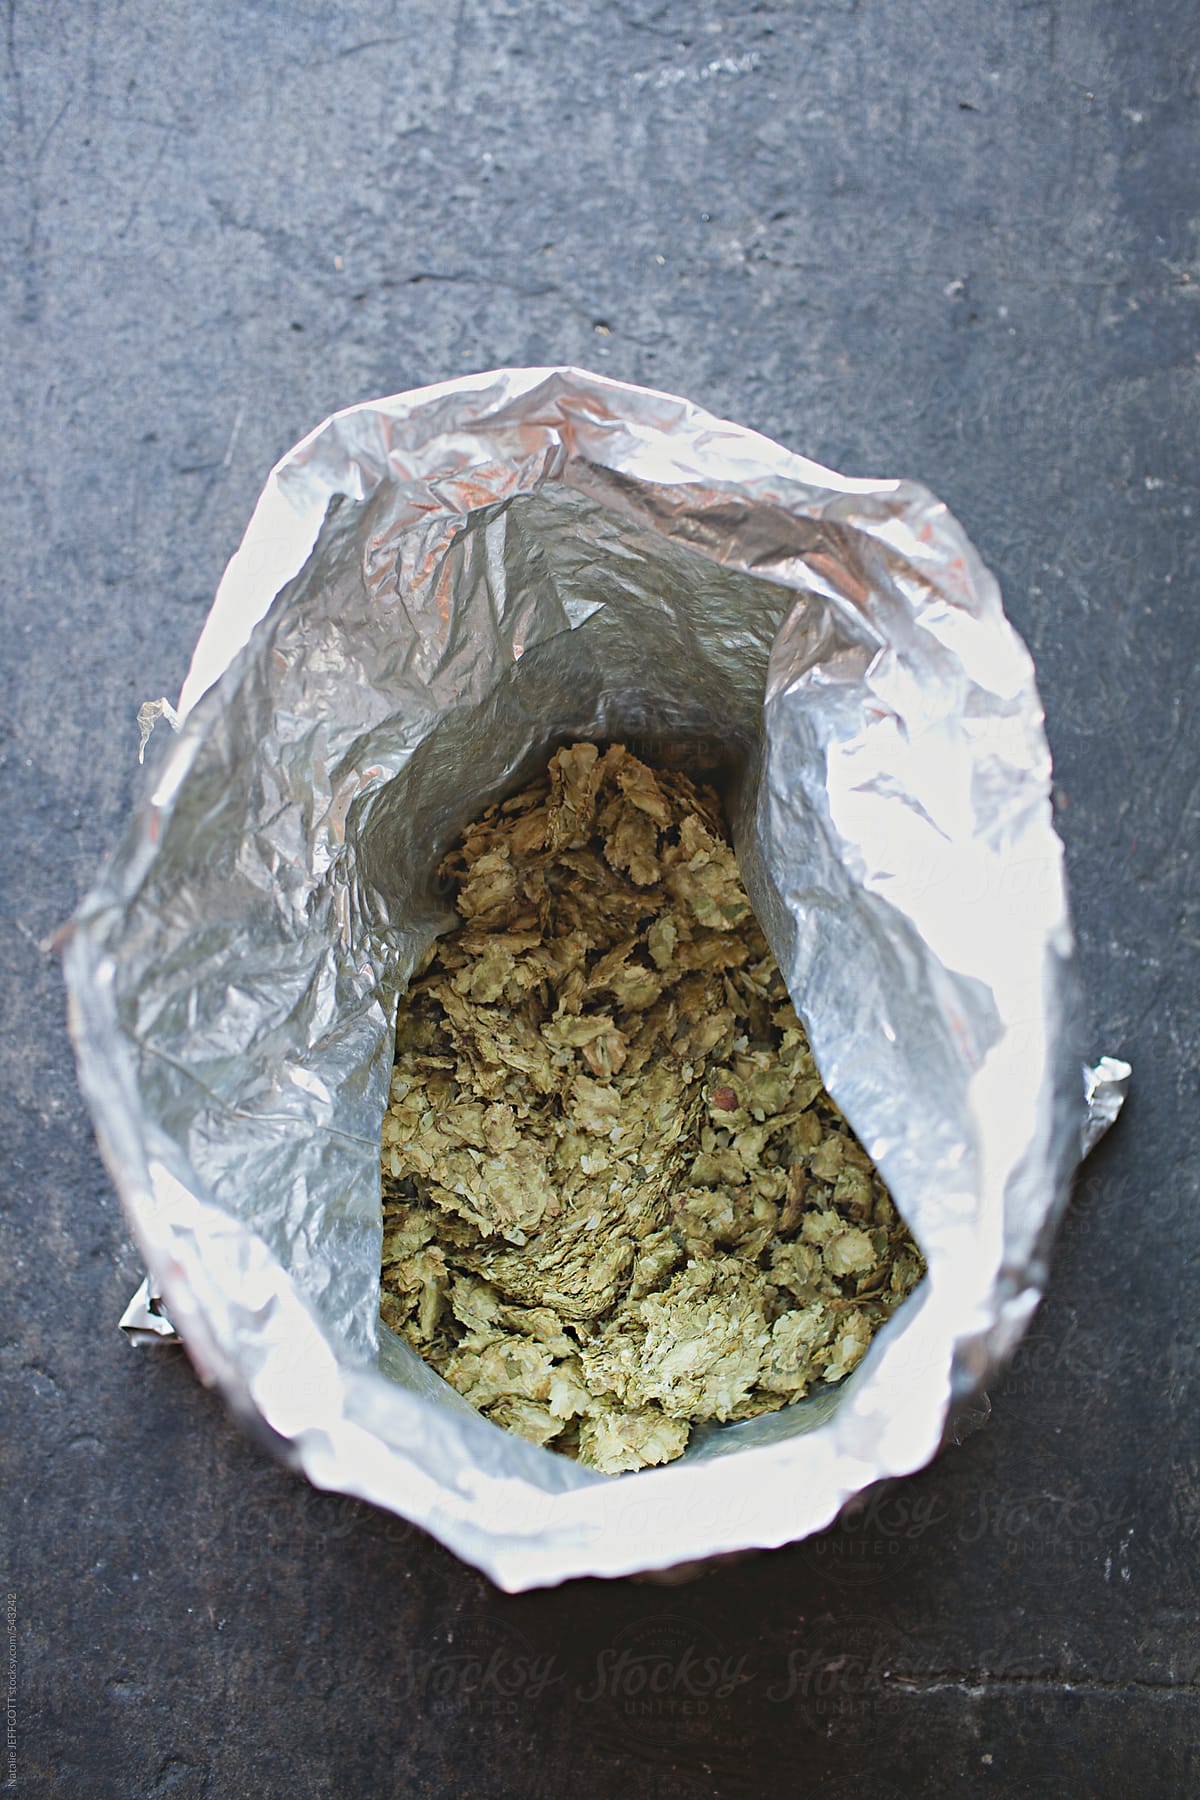 dried hops used in brewing beer in silver bag on concrete floor